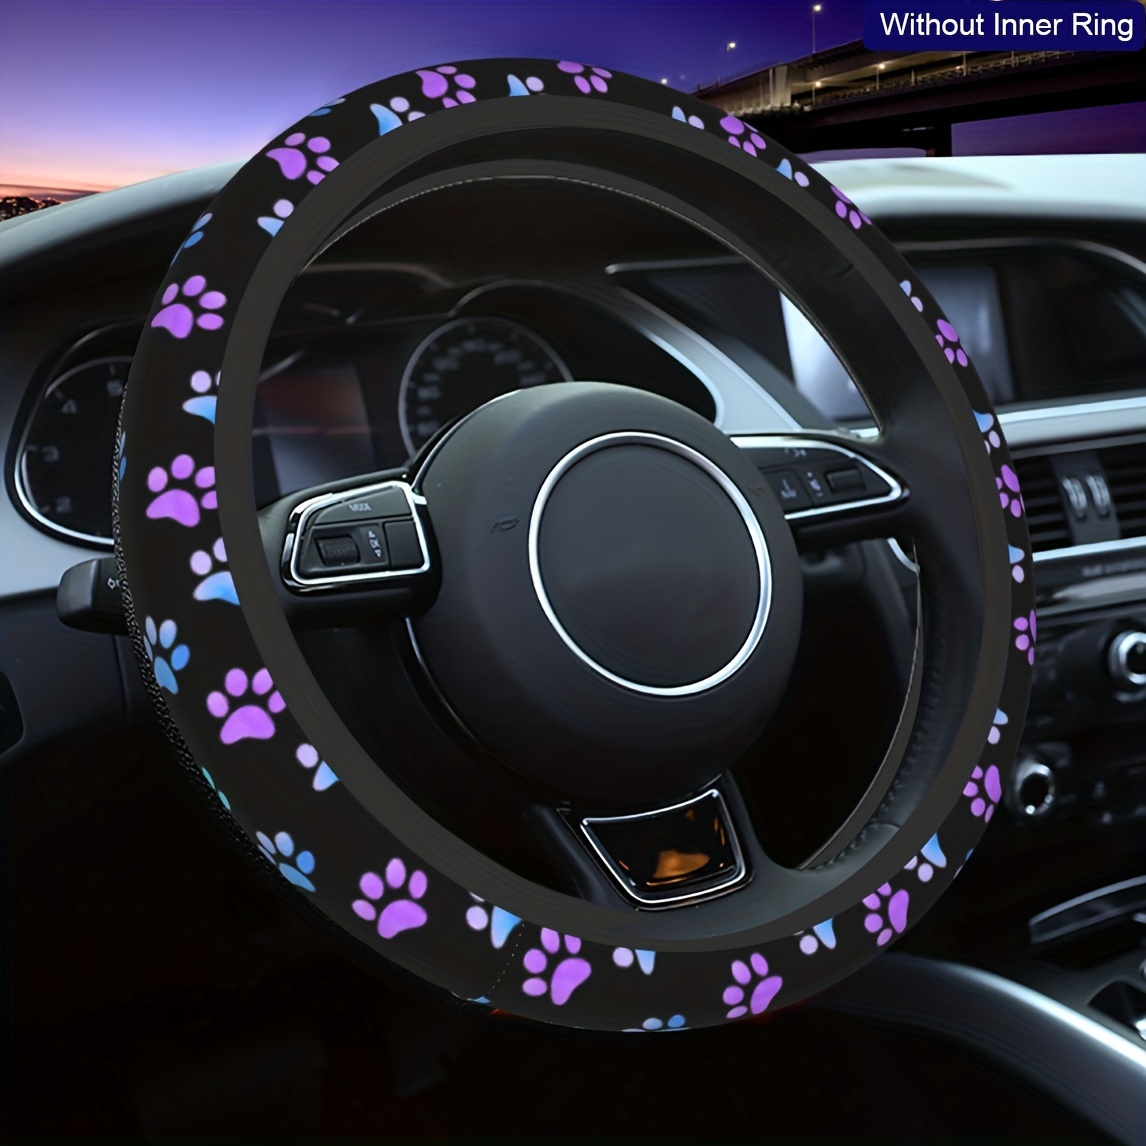 

Blue Purple Galaxy Paw Prints Car Steering Wheel Cover - Universal 15 Inch Anti-slip Car Steering Wheel Protector Cover, Car Interior Accessorie Decor